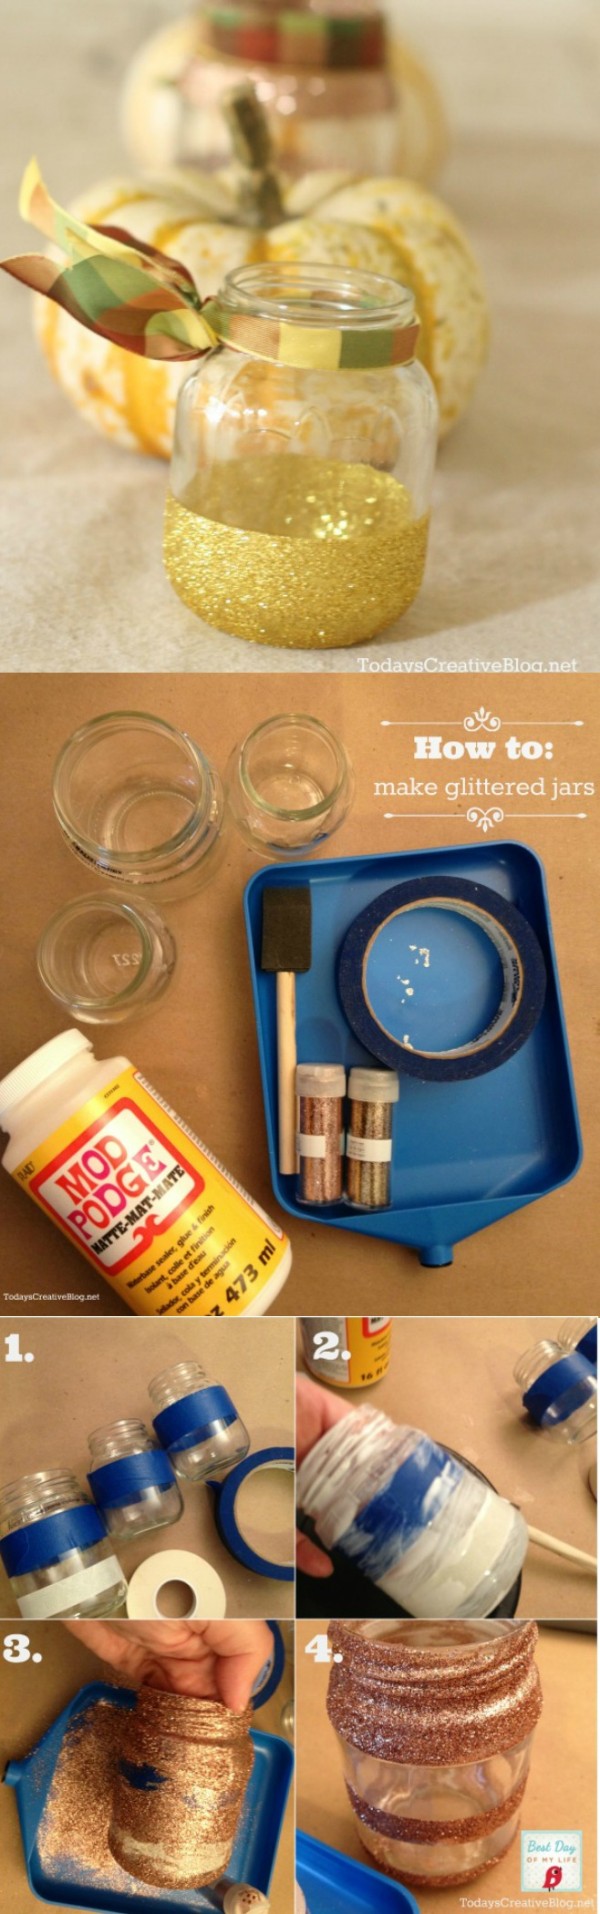 DIY Glittered Jars | TodaysCreativeBlog.net